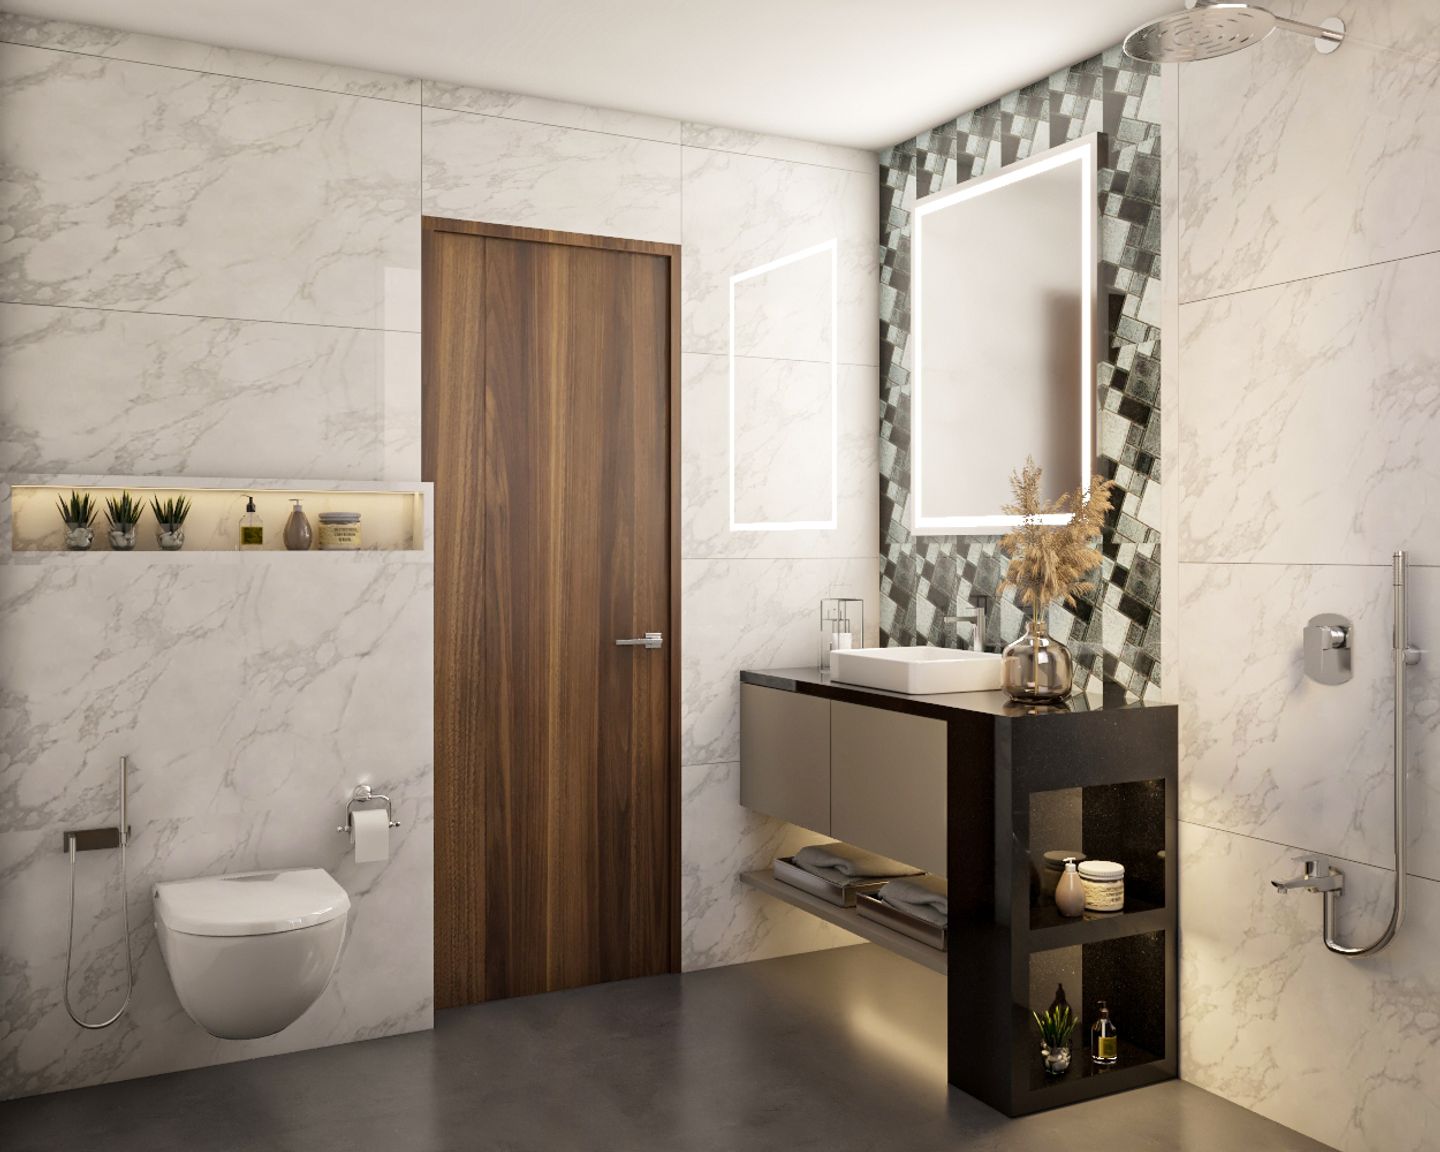 Multicoloured Bathroom Design With Marble Walls And Granite Countertop - Livspace